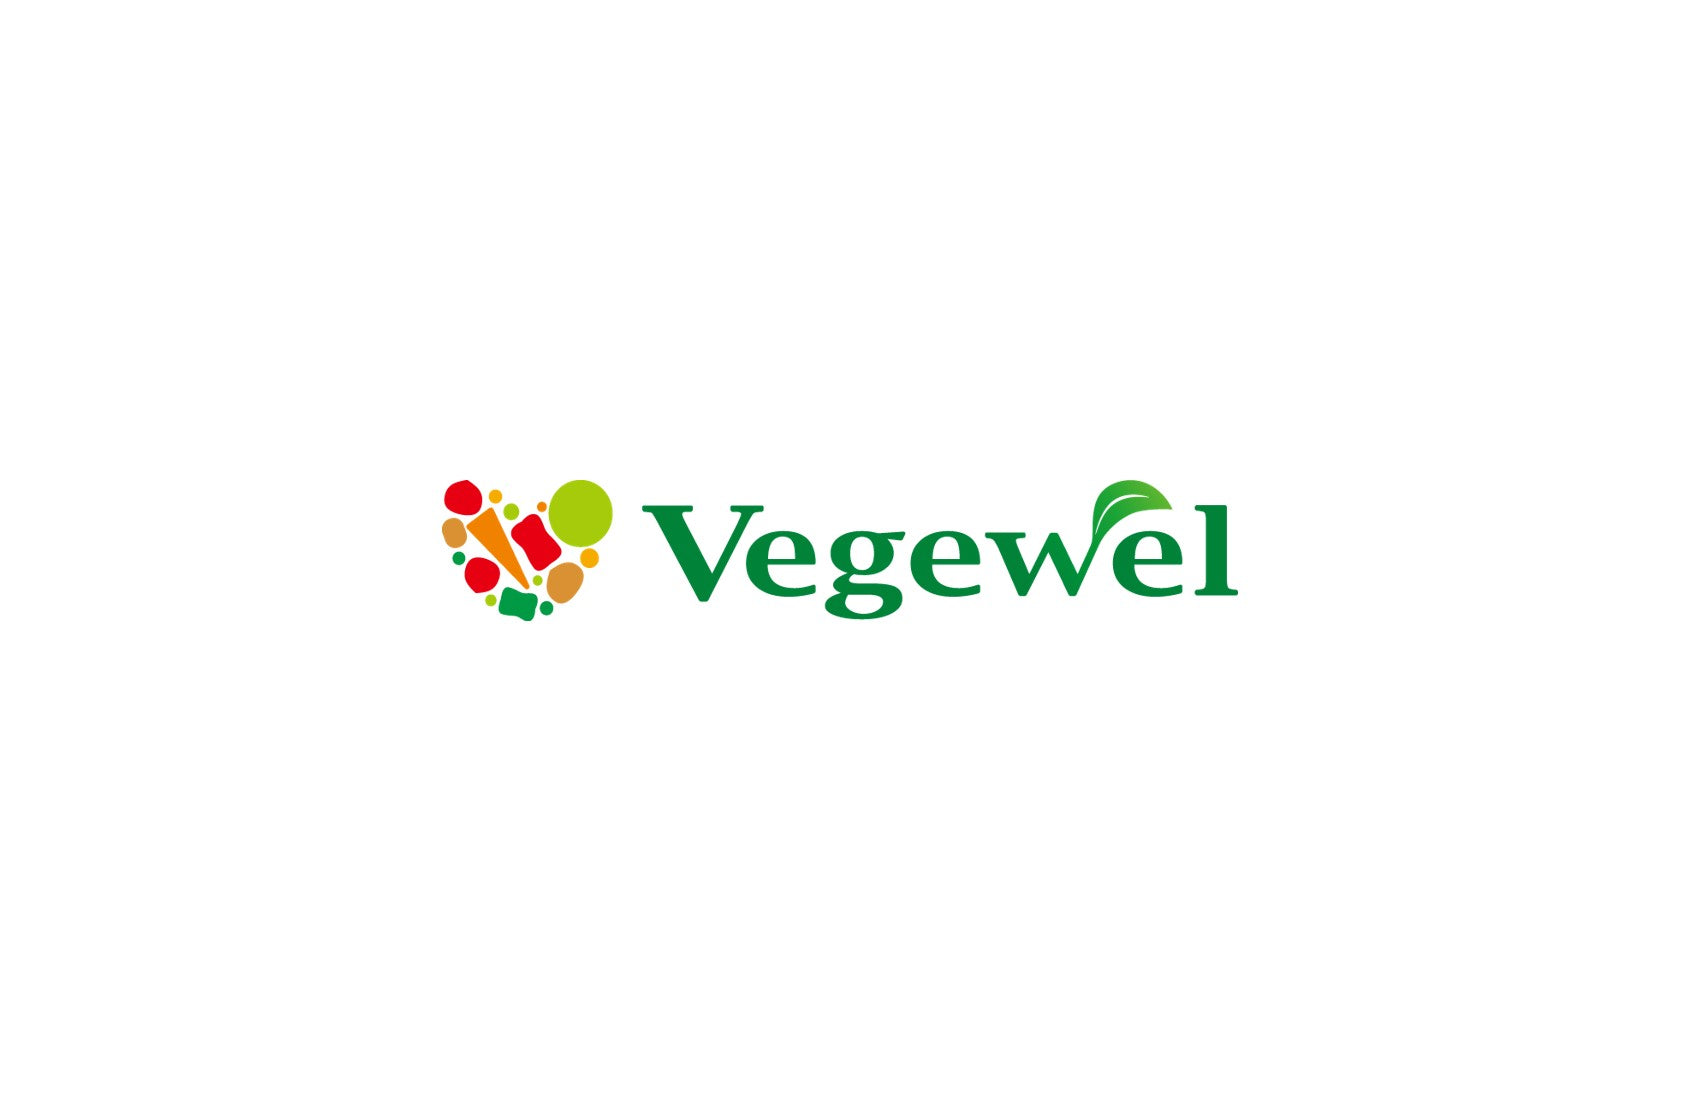 『Vegewel』のWebサイトに掲載！